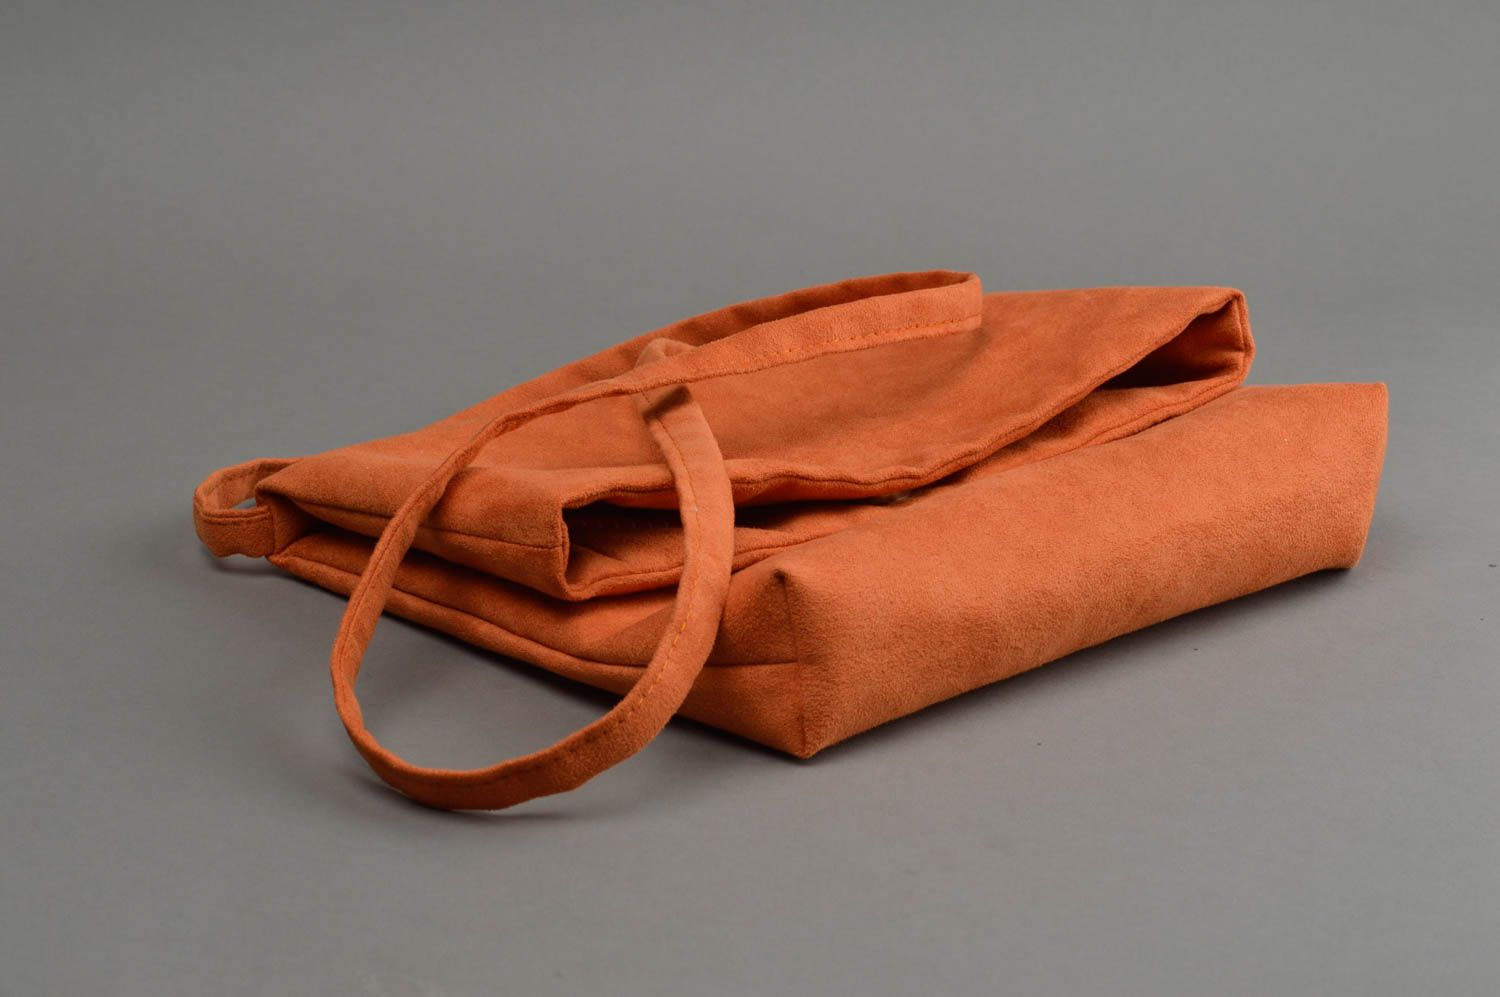 Handmade orange cloth purse designer handbag gift ideas for her women accessory photo 2